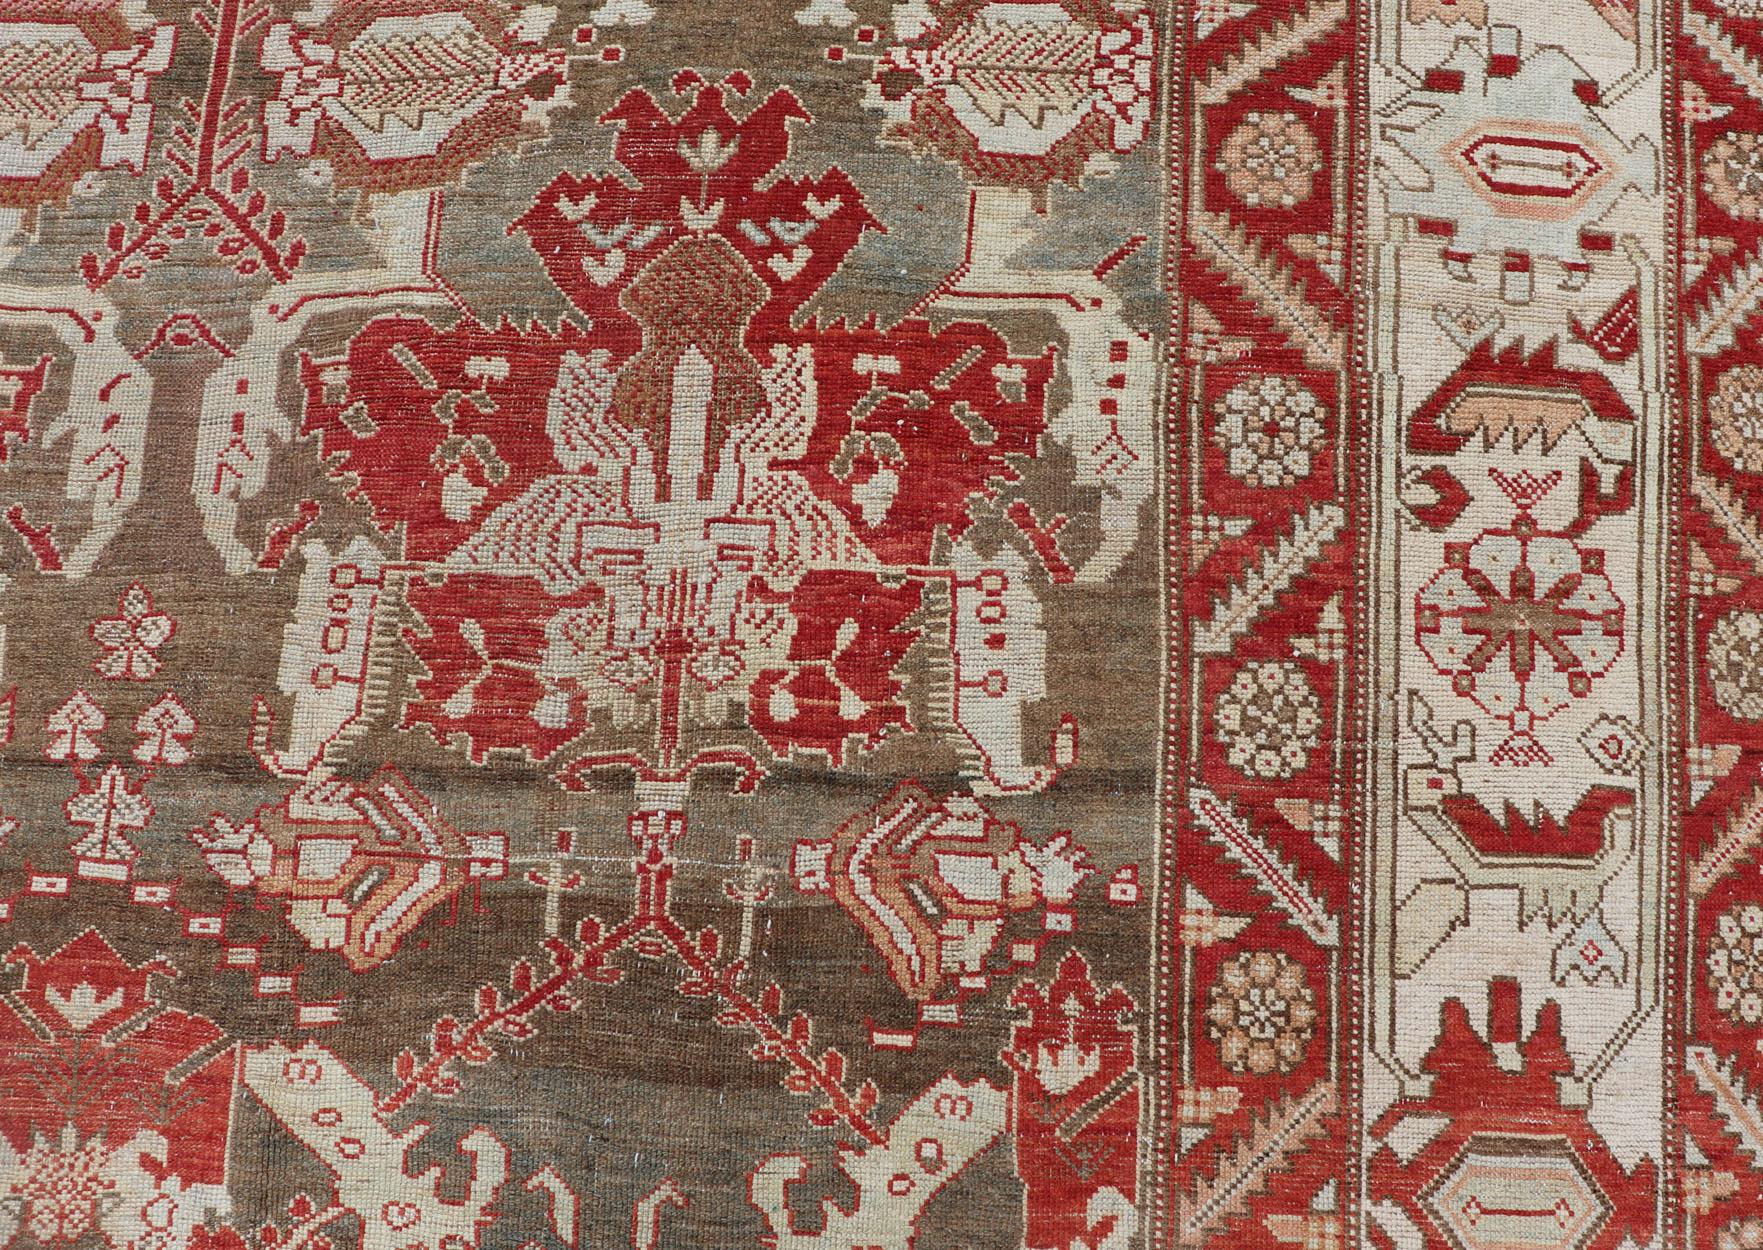 Antique Persian Large Scale Tribal Design Bakhtiari Rug in Multi Colors For Sale 5